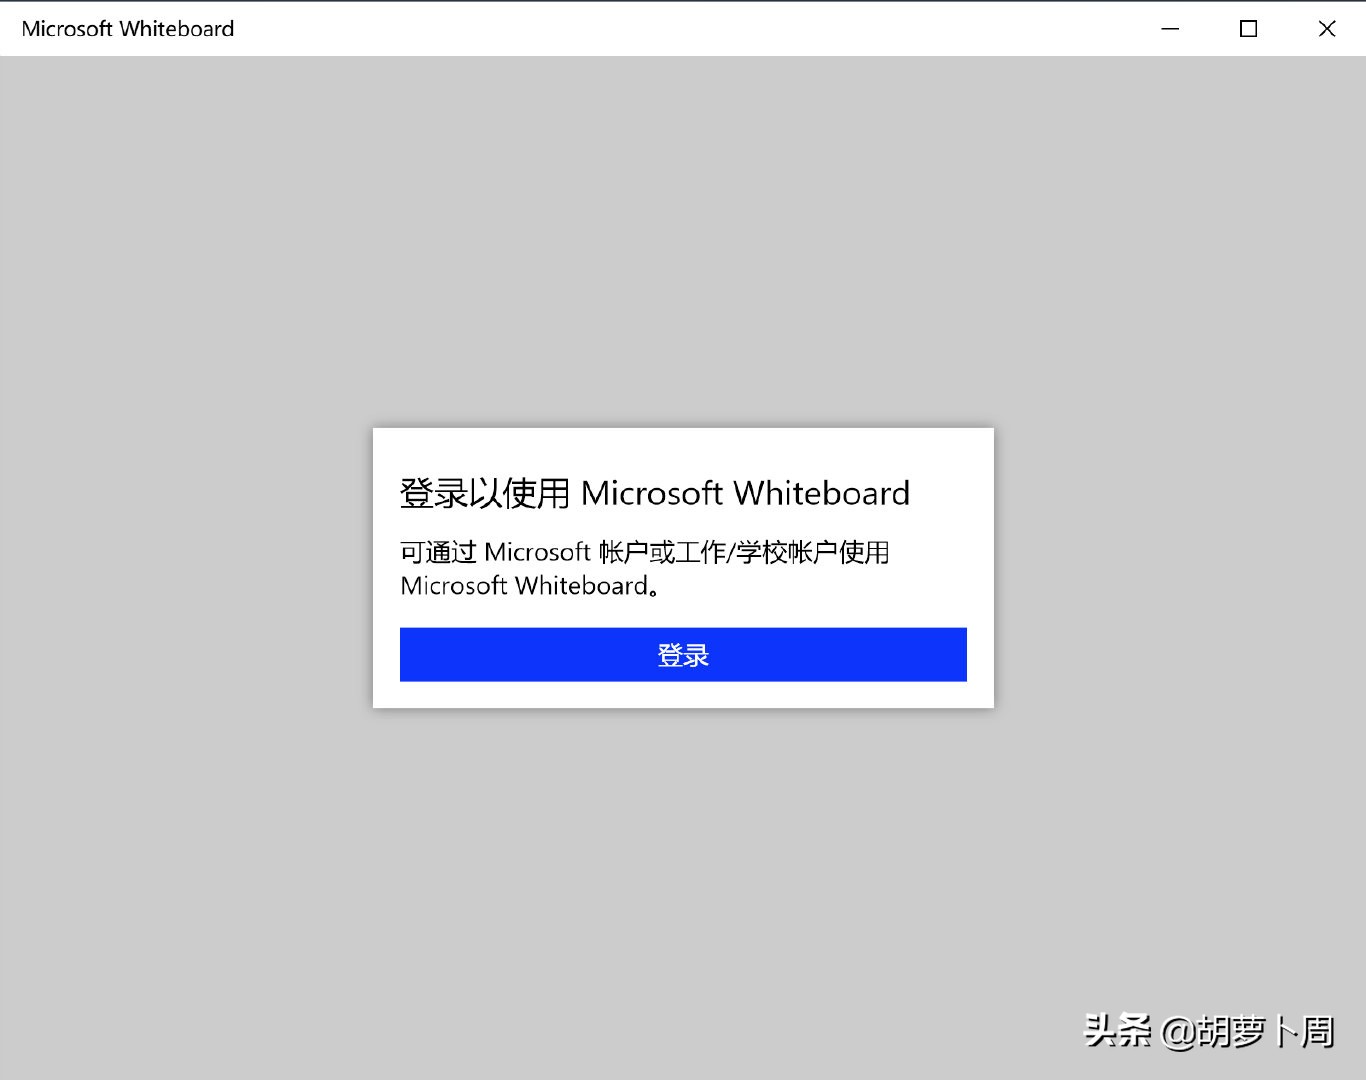 Windows 10 21H2 太阳谷更新镜像发布，萝卜哥带你抢先体验